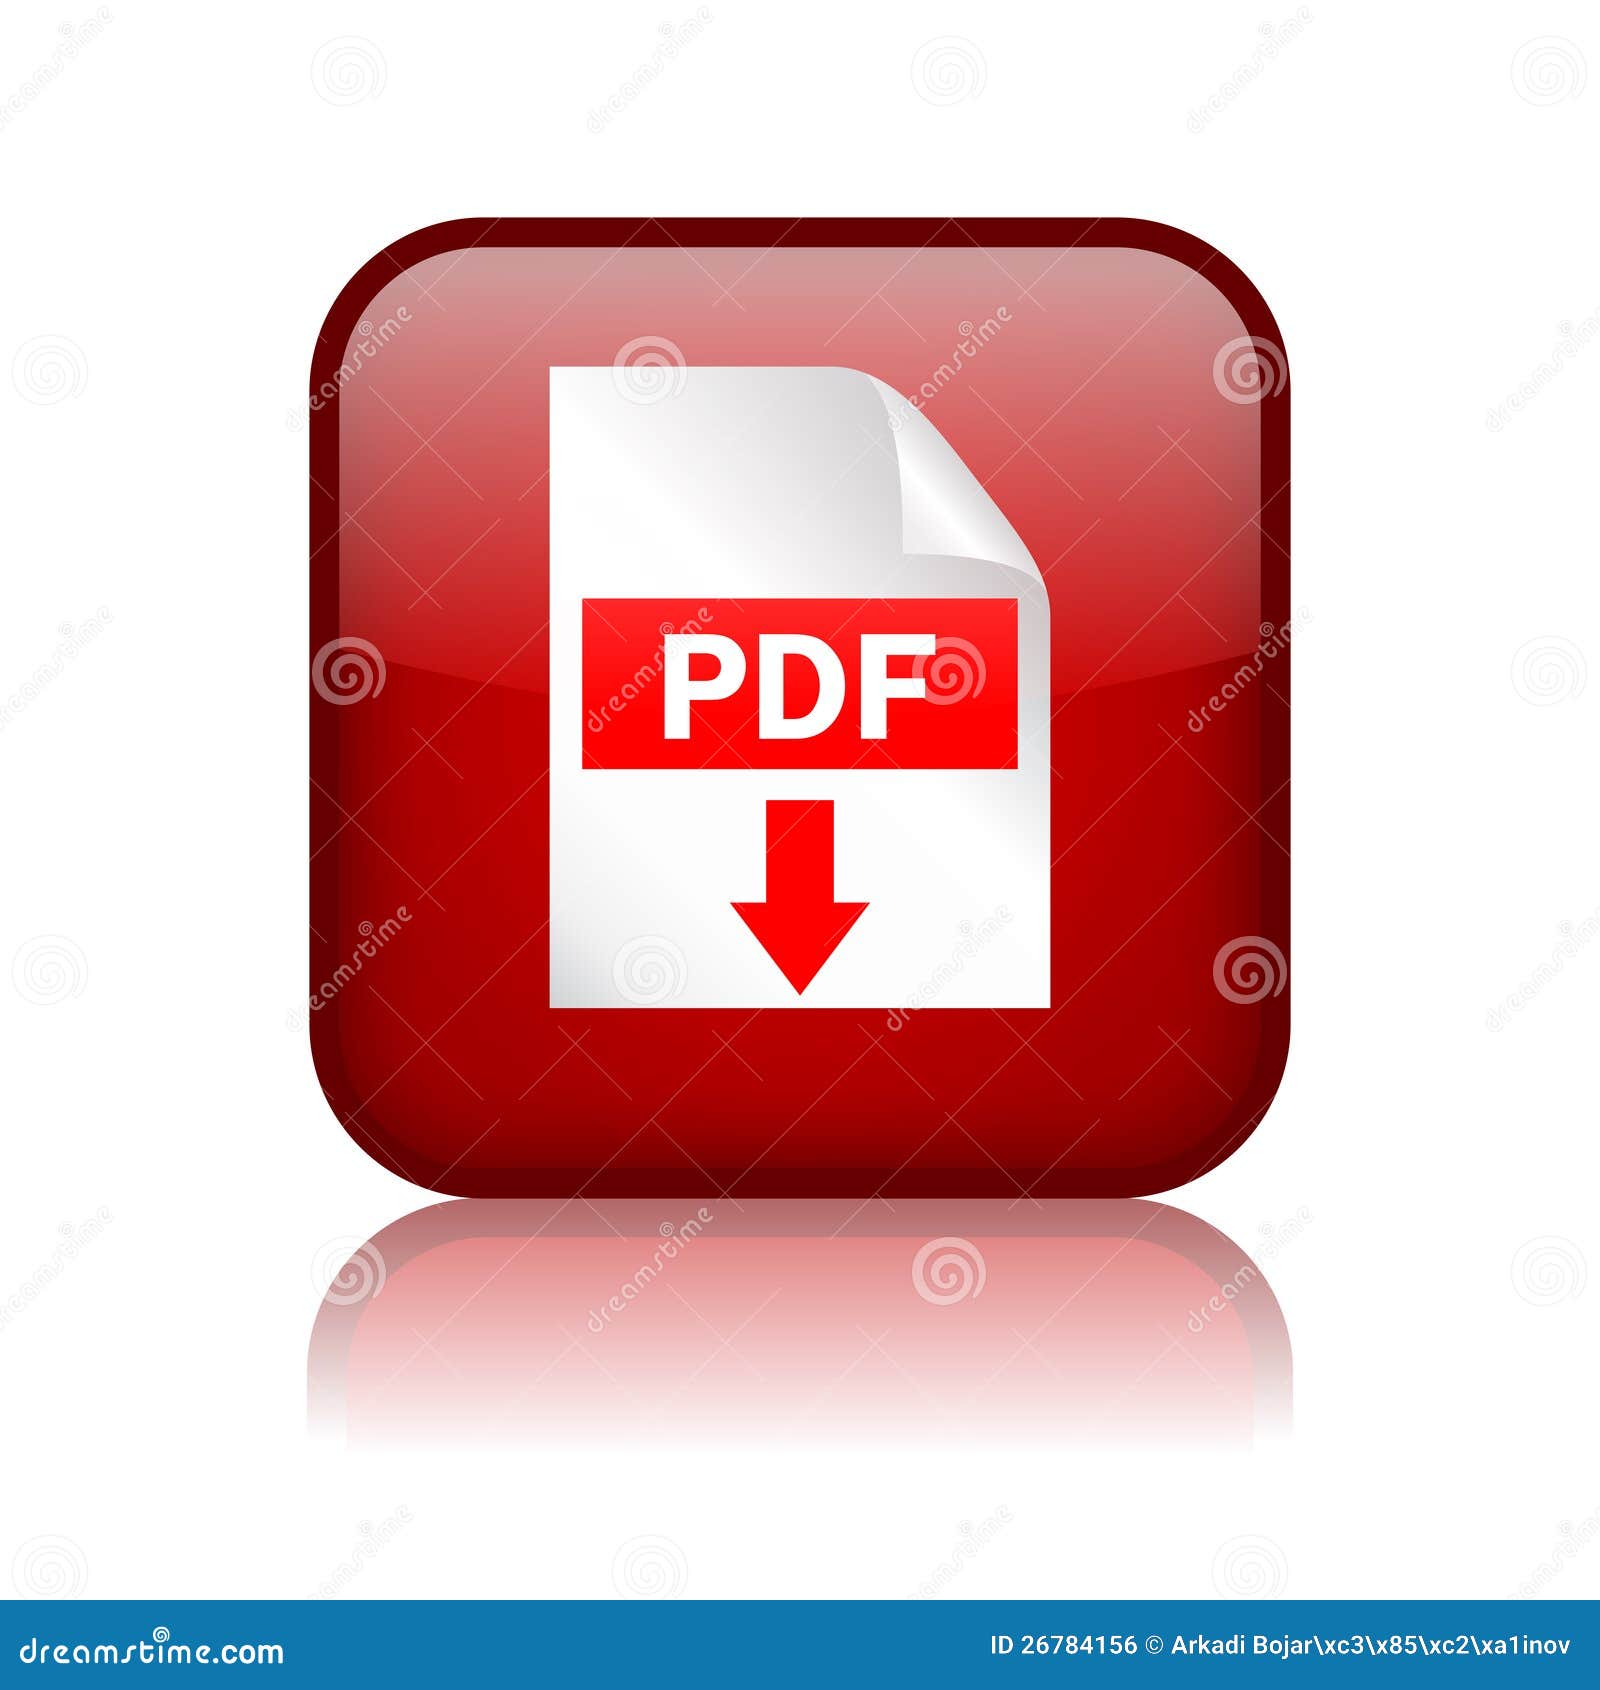 Pdf Download Button Royalty Free Stock Image - Image: 26784156